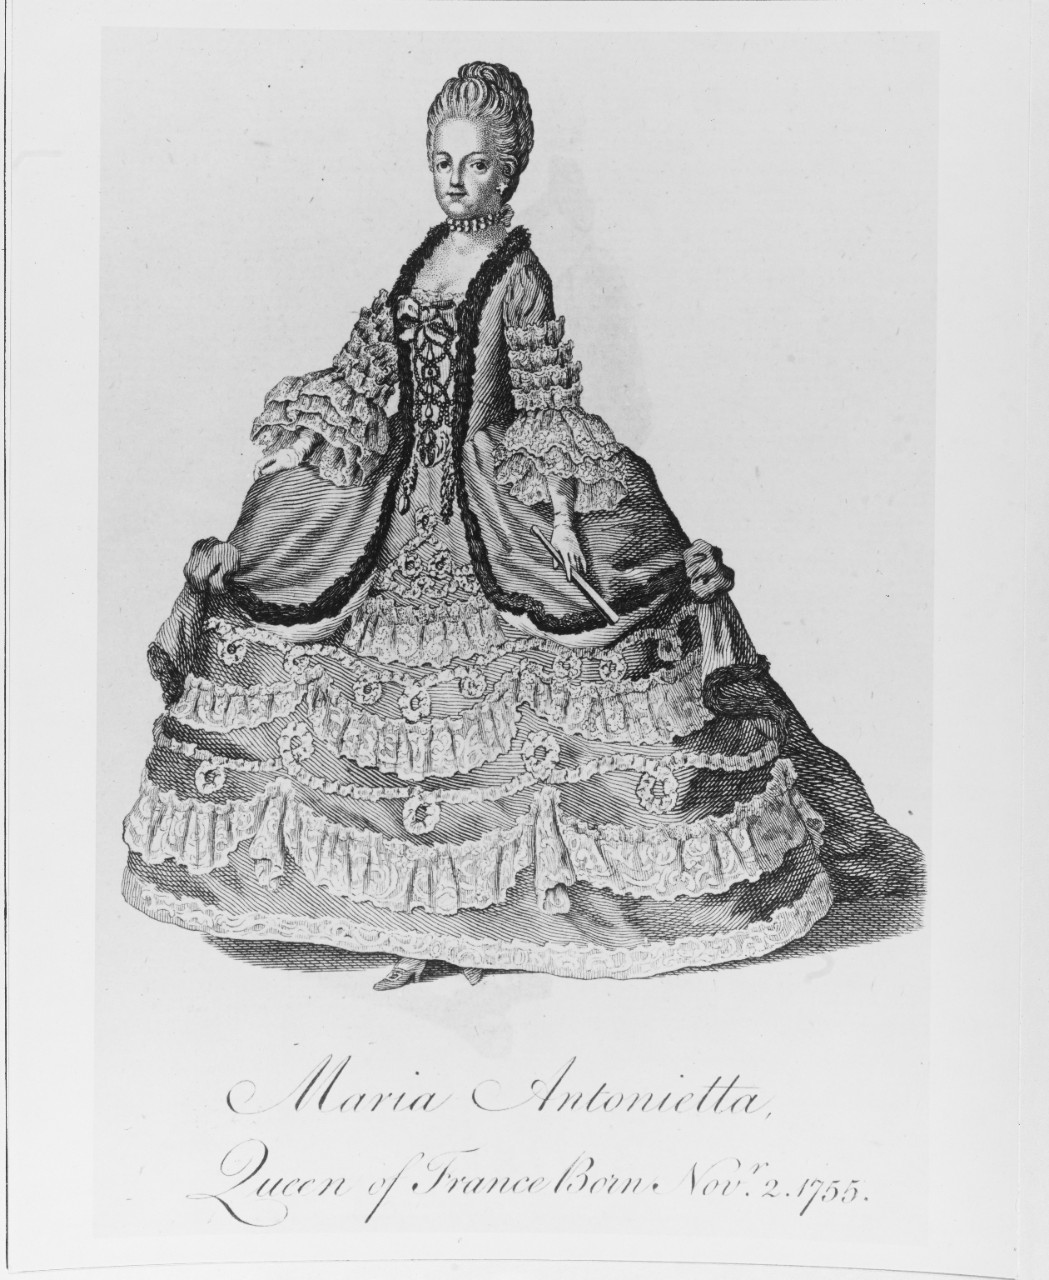 Marie Antoinette (1755-1793), Queen of France